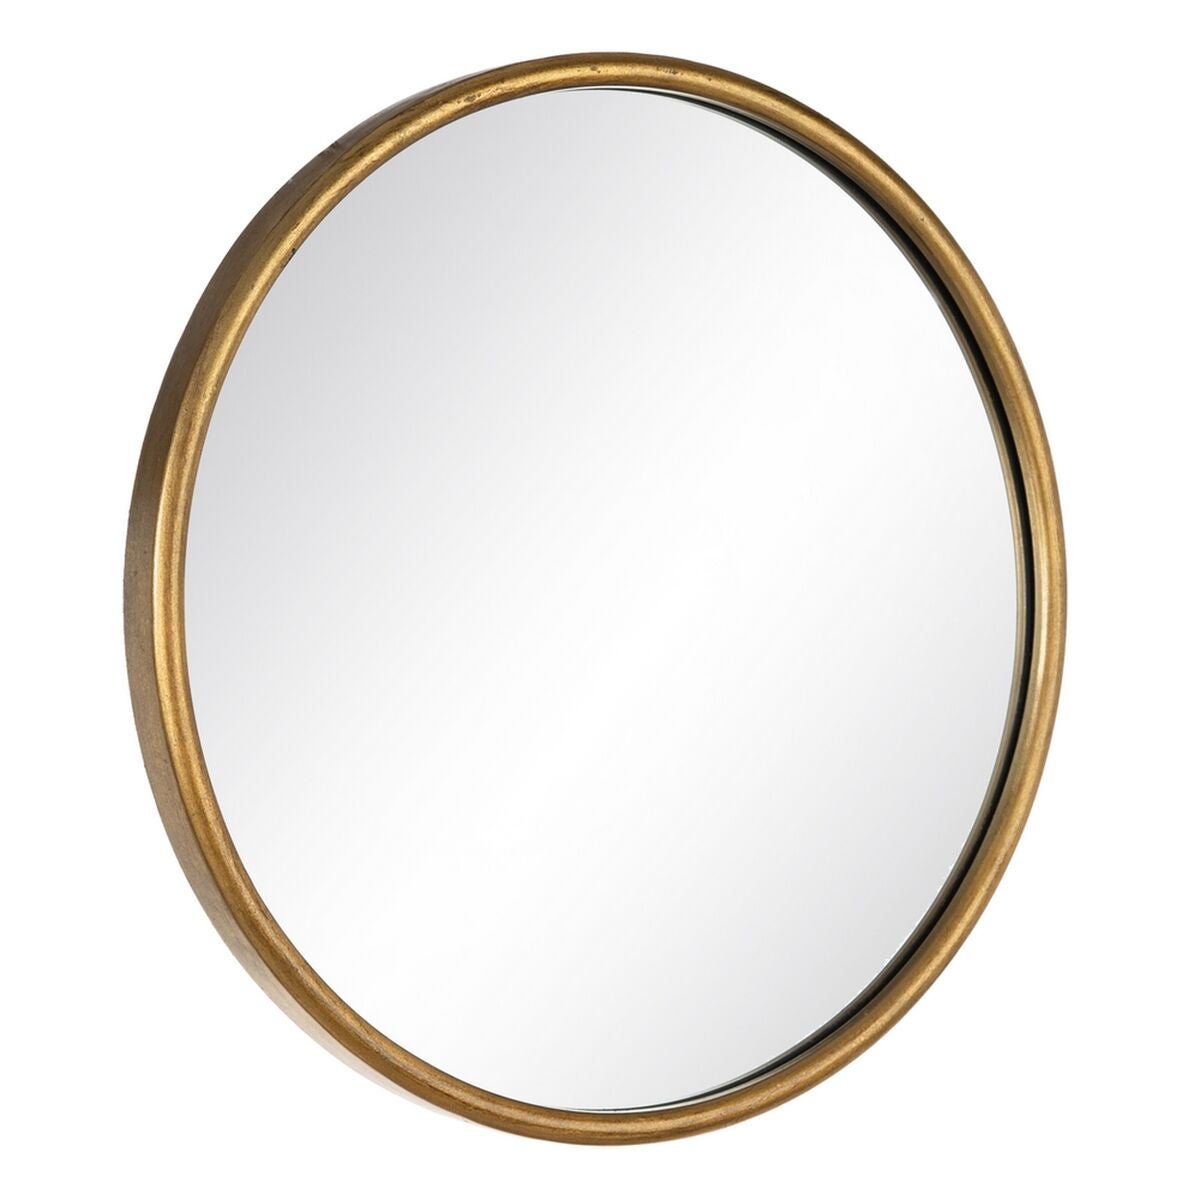 Espejo ovalado dorado 51x41